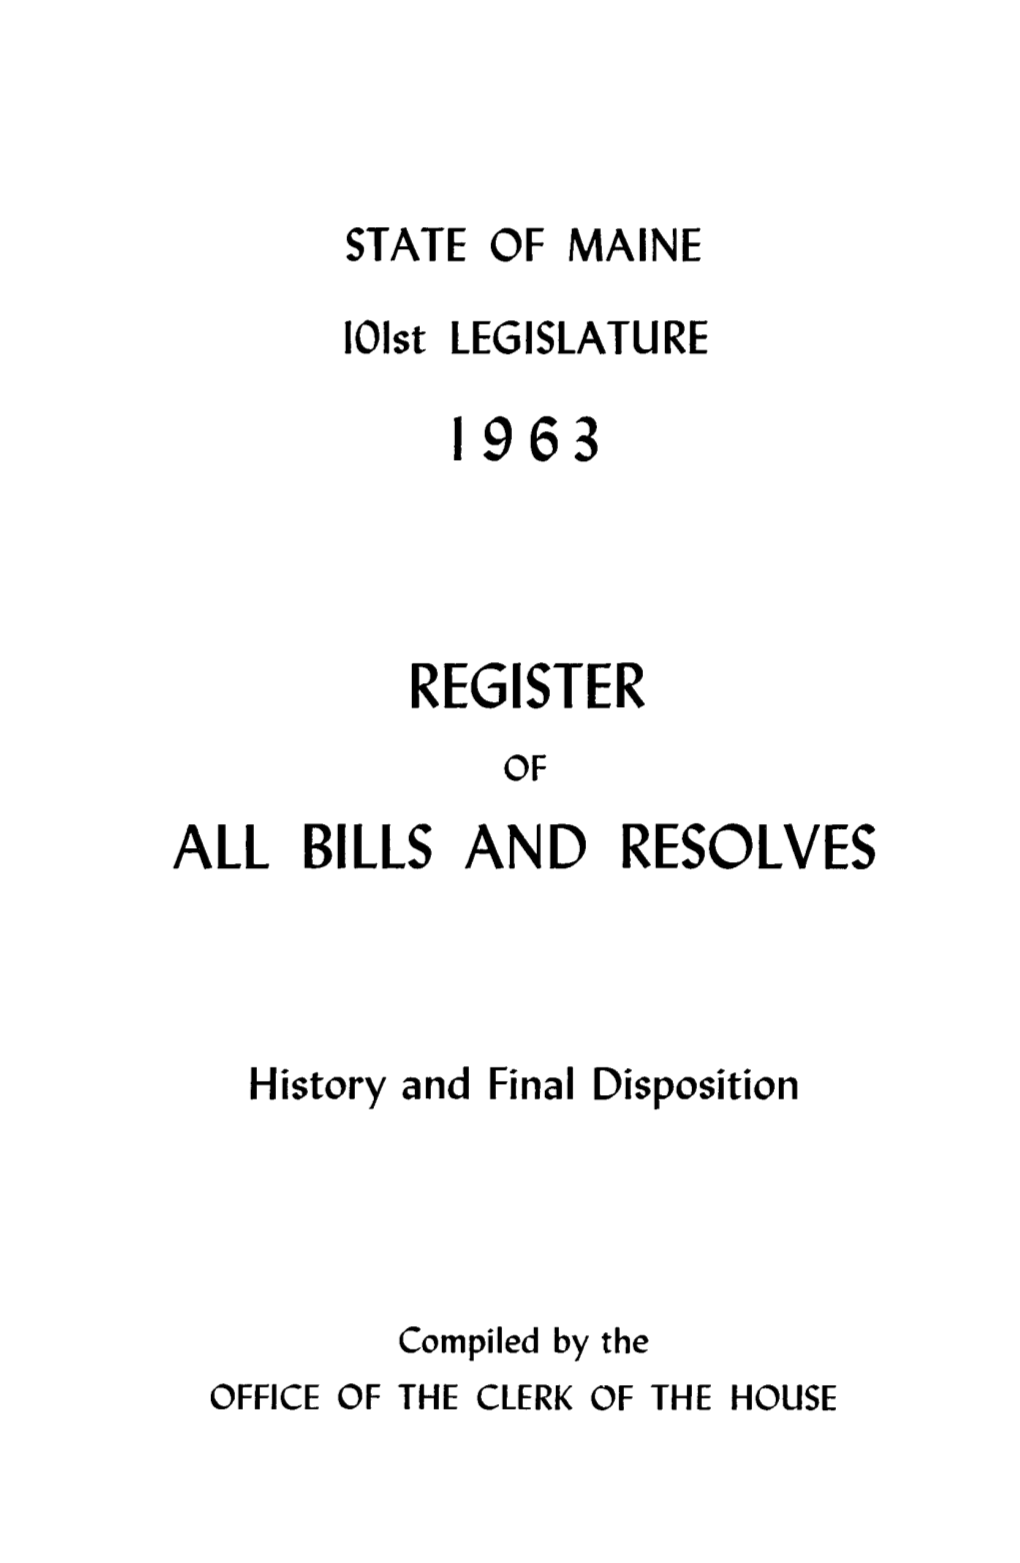 Register All Bills and Resolves